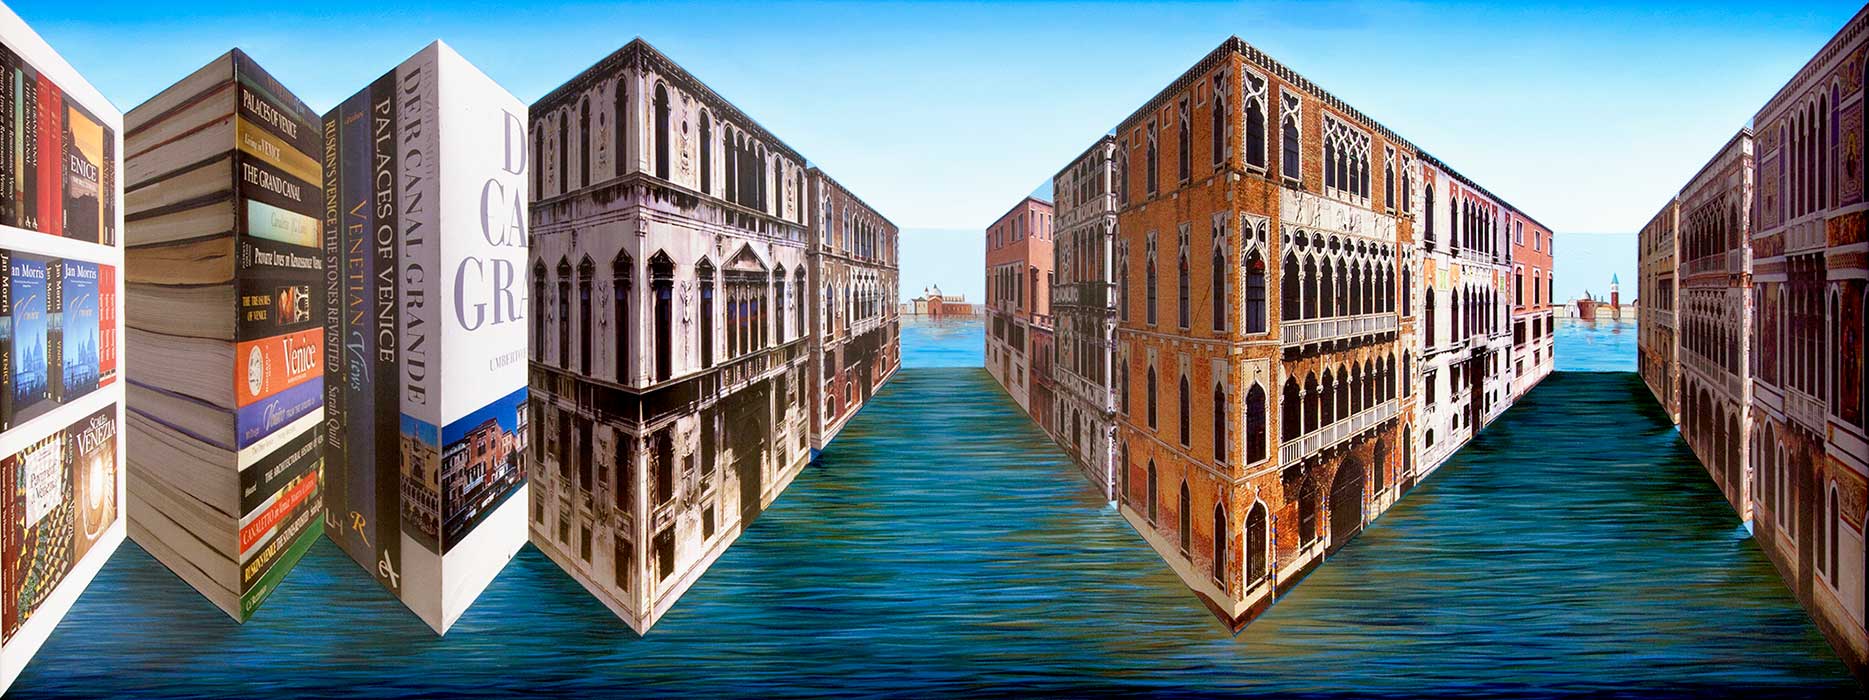 Books by Venice <p>2012 | Edition 5 | 81 X 192 X 28 cm / 32 x 75¾ x 11¼ in</p>
